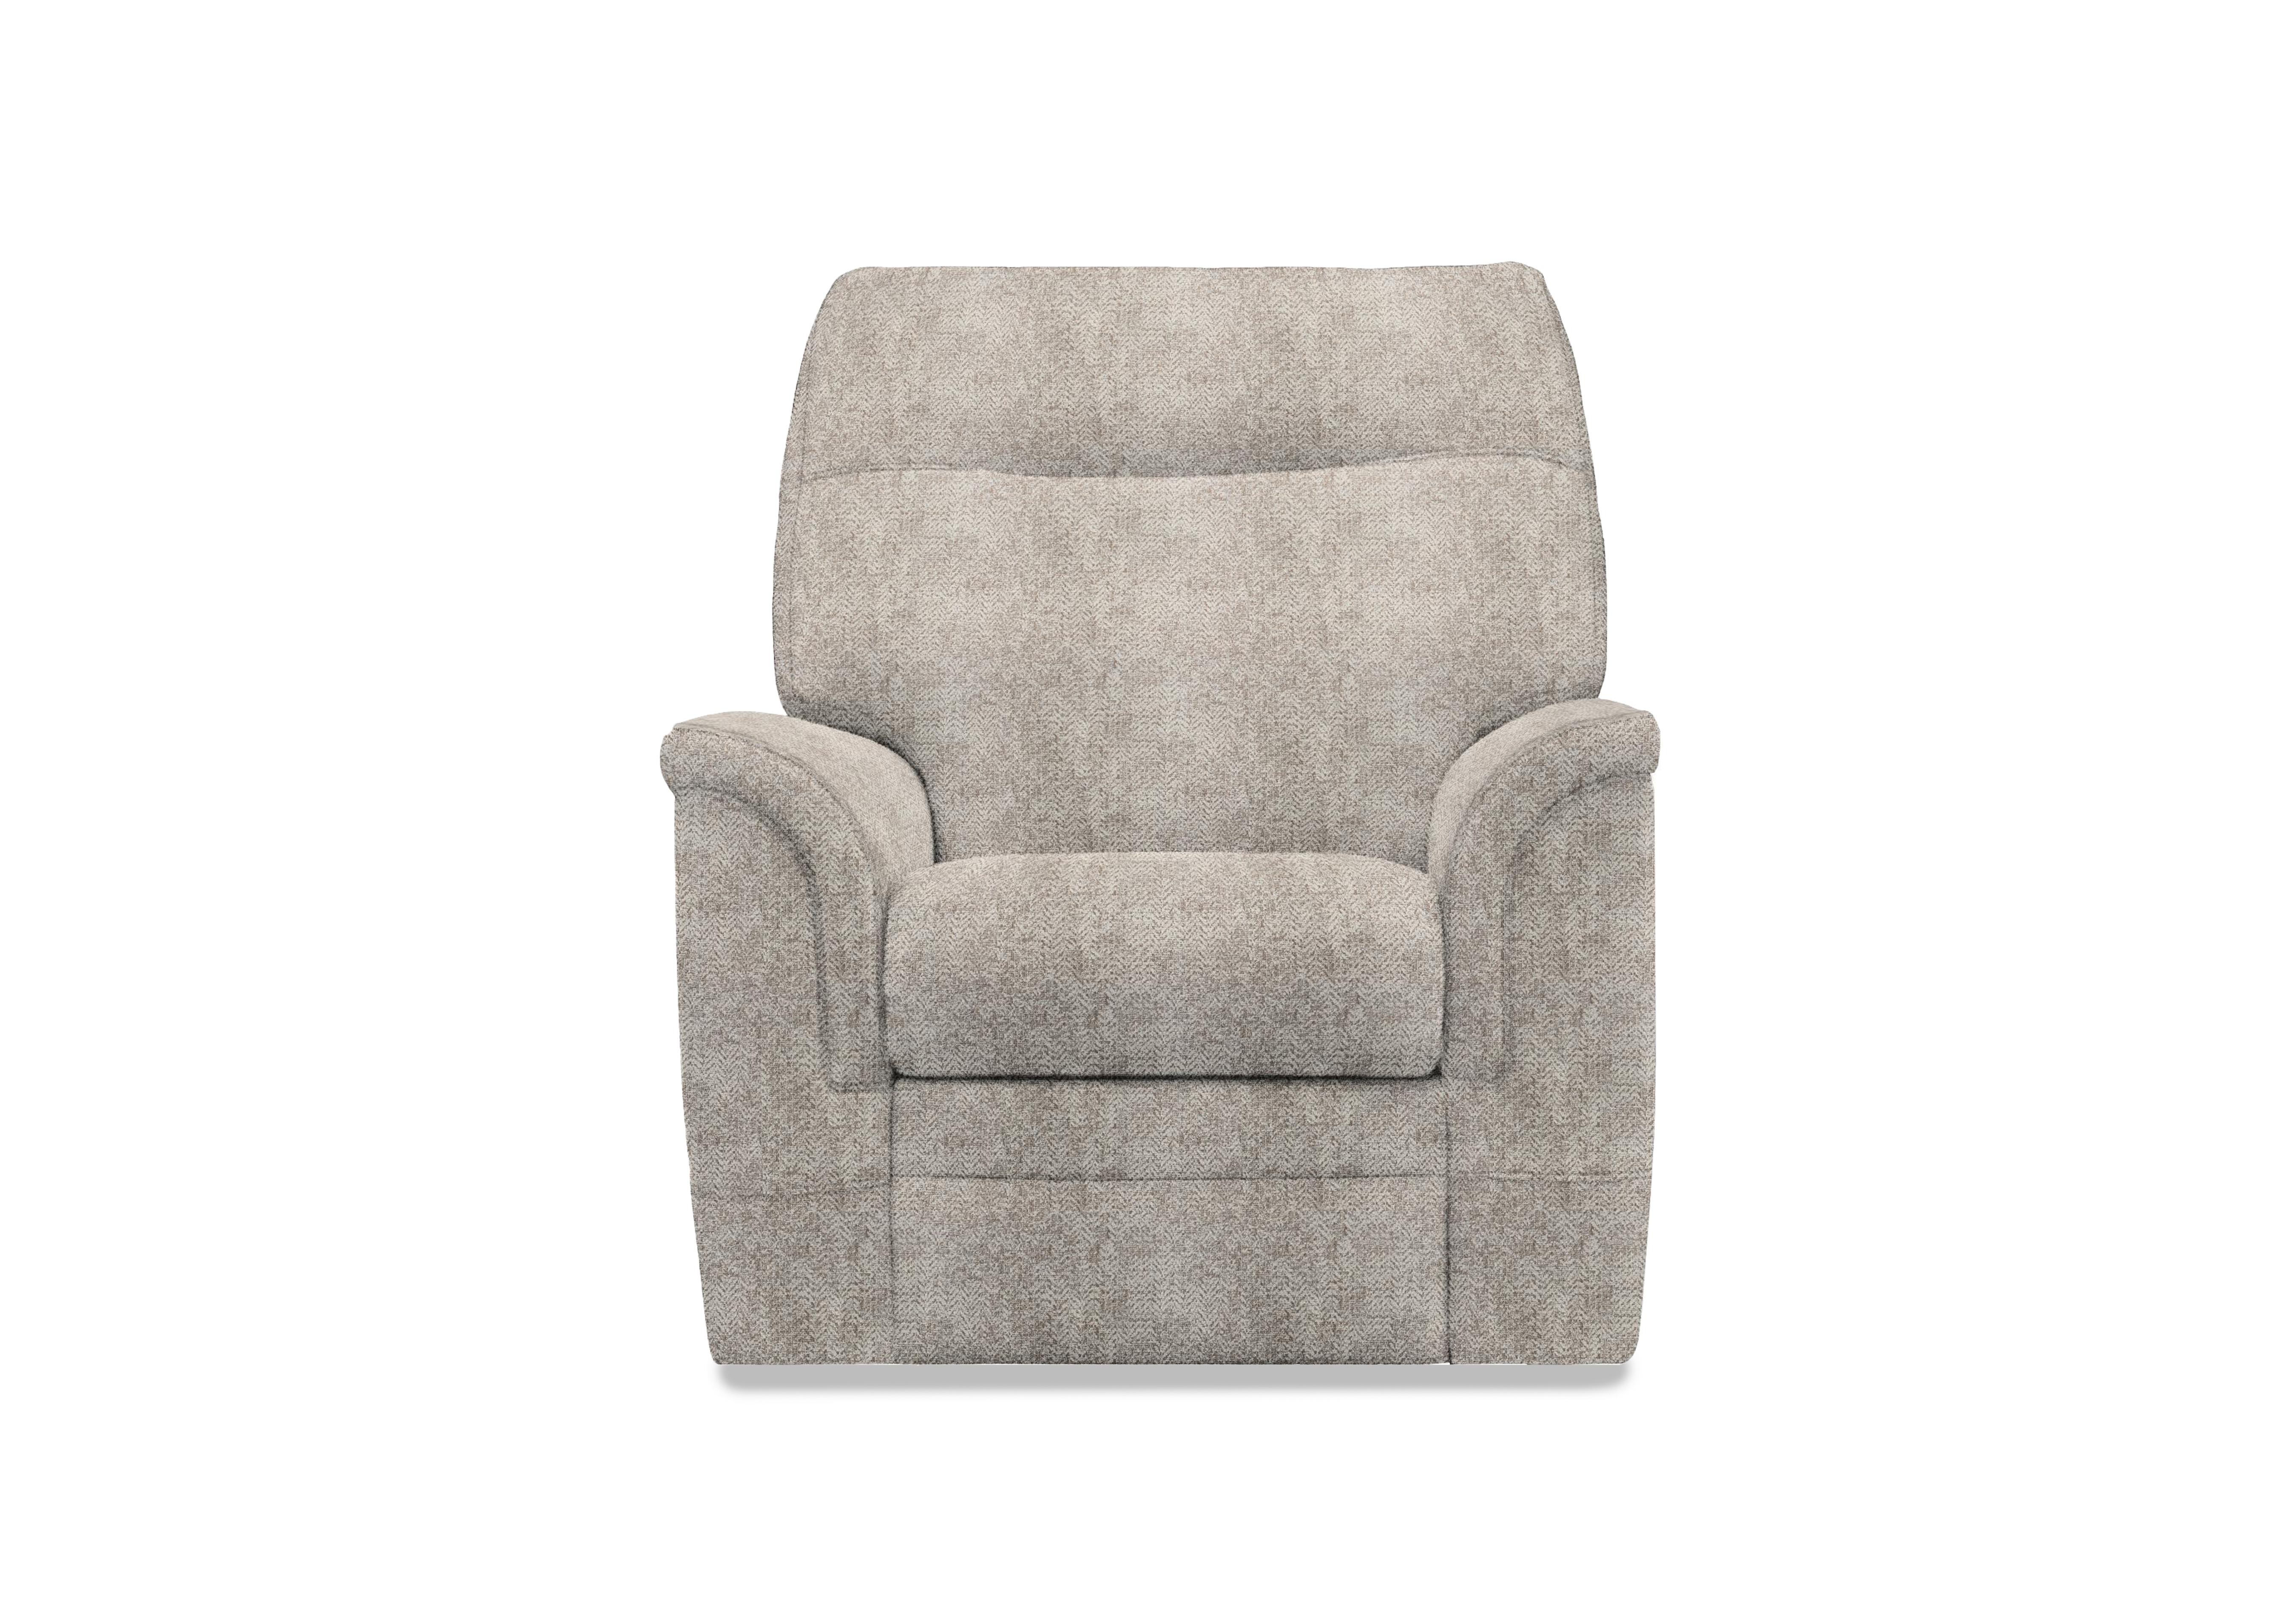 Hudson 23 Fabric Chair in Ida Stone 006035-0055 on Furniture Village